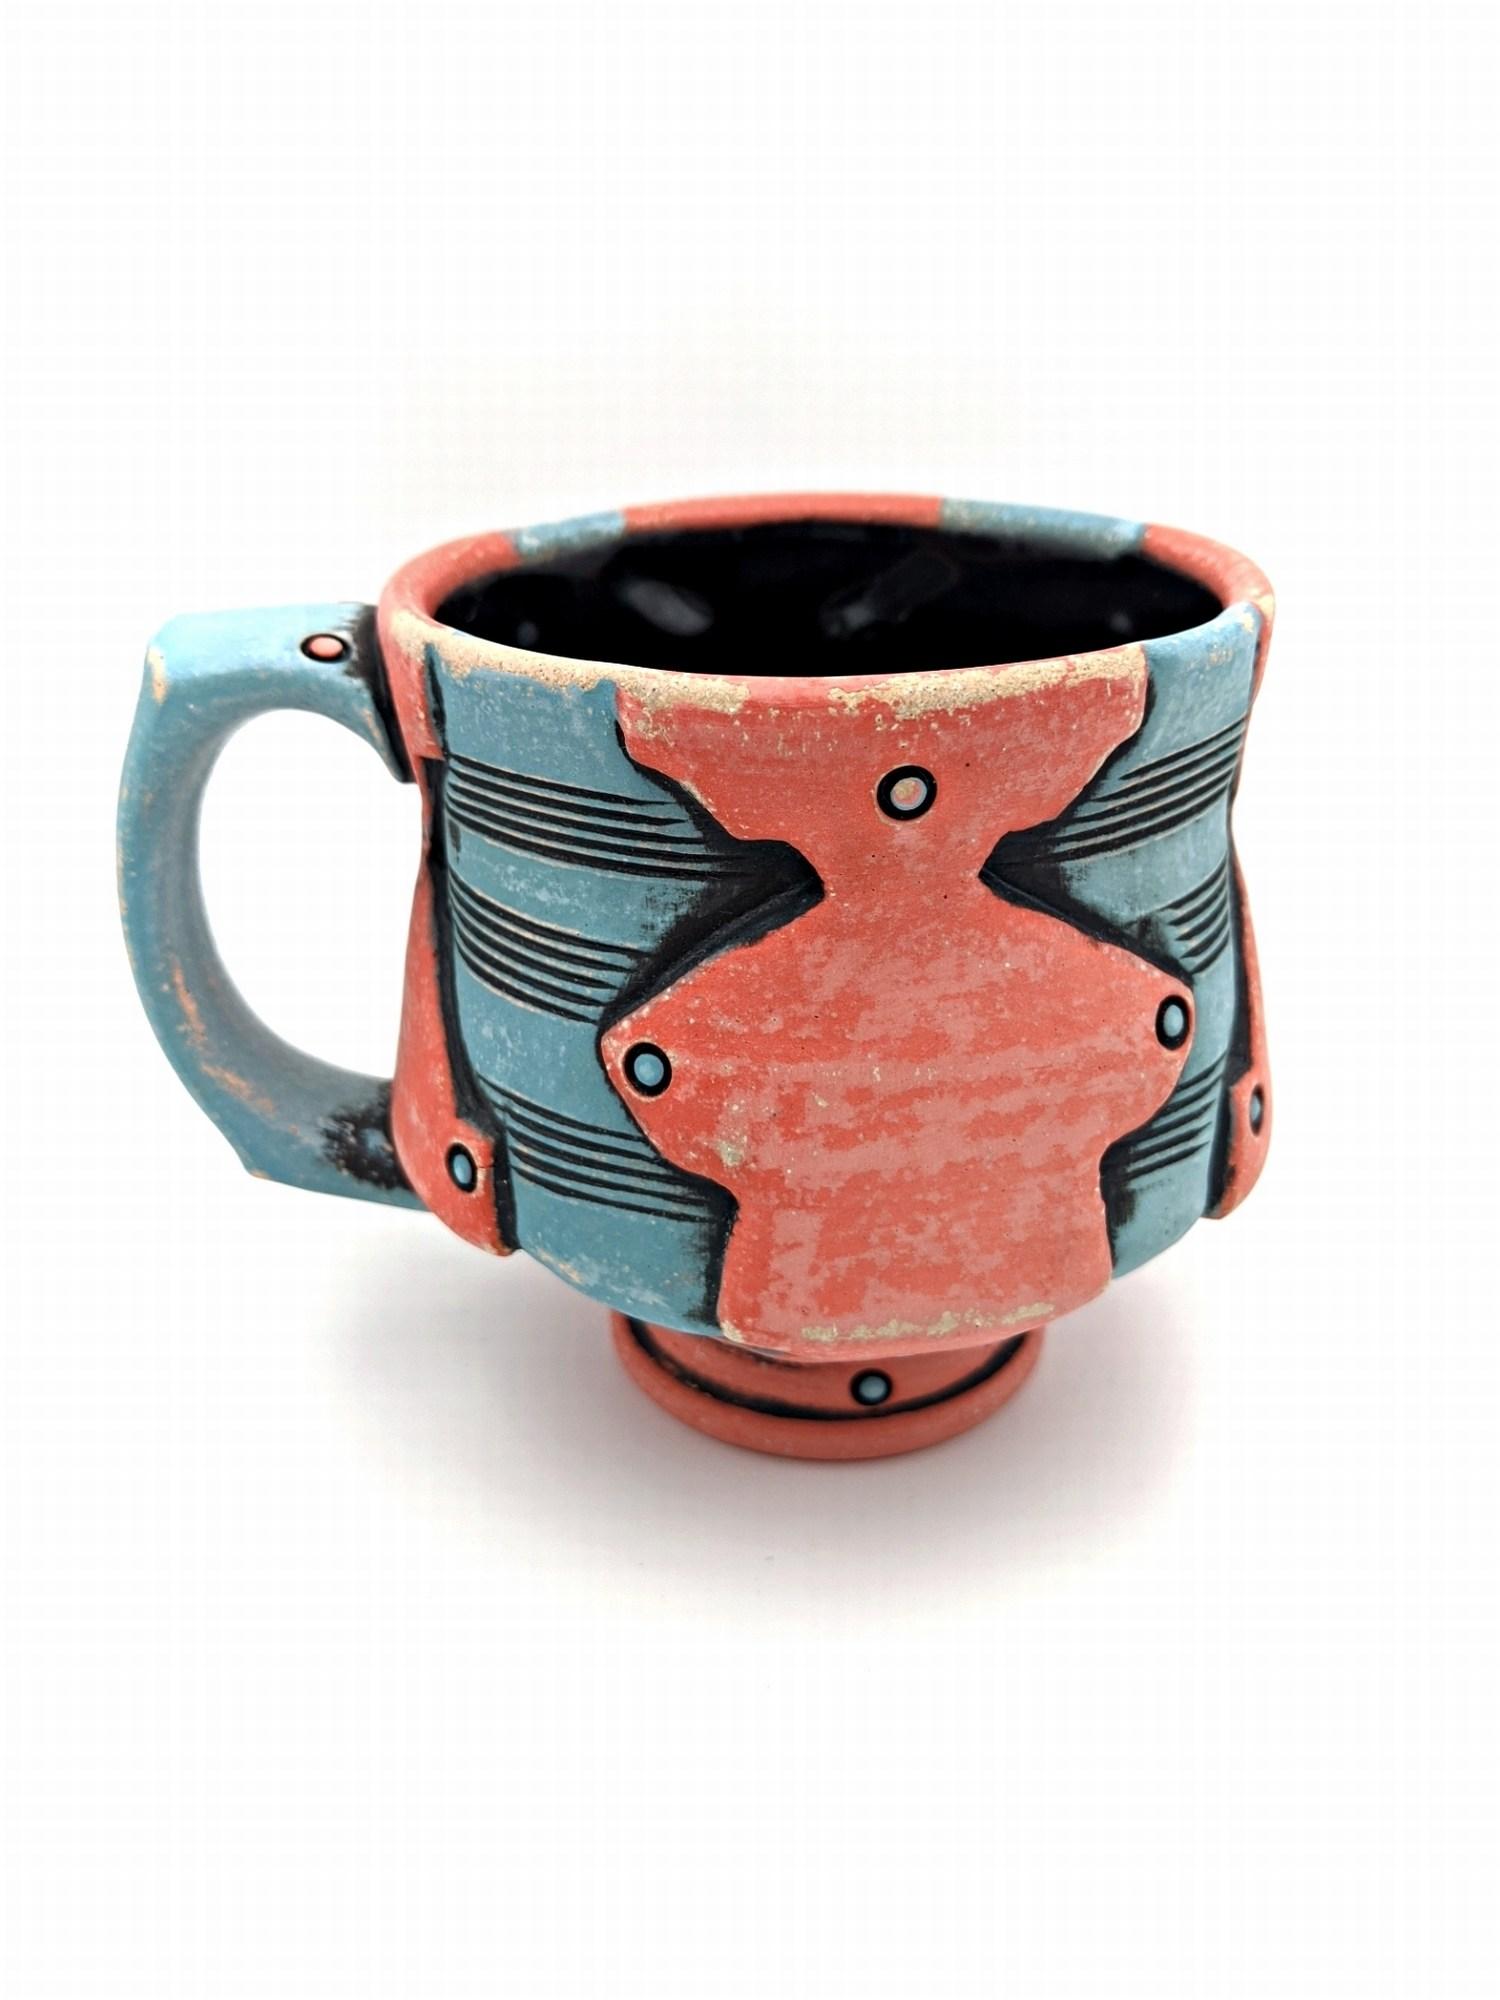 Andrew Clark Figurative Sculpture - Coffee Mug